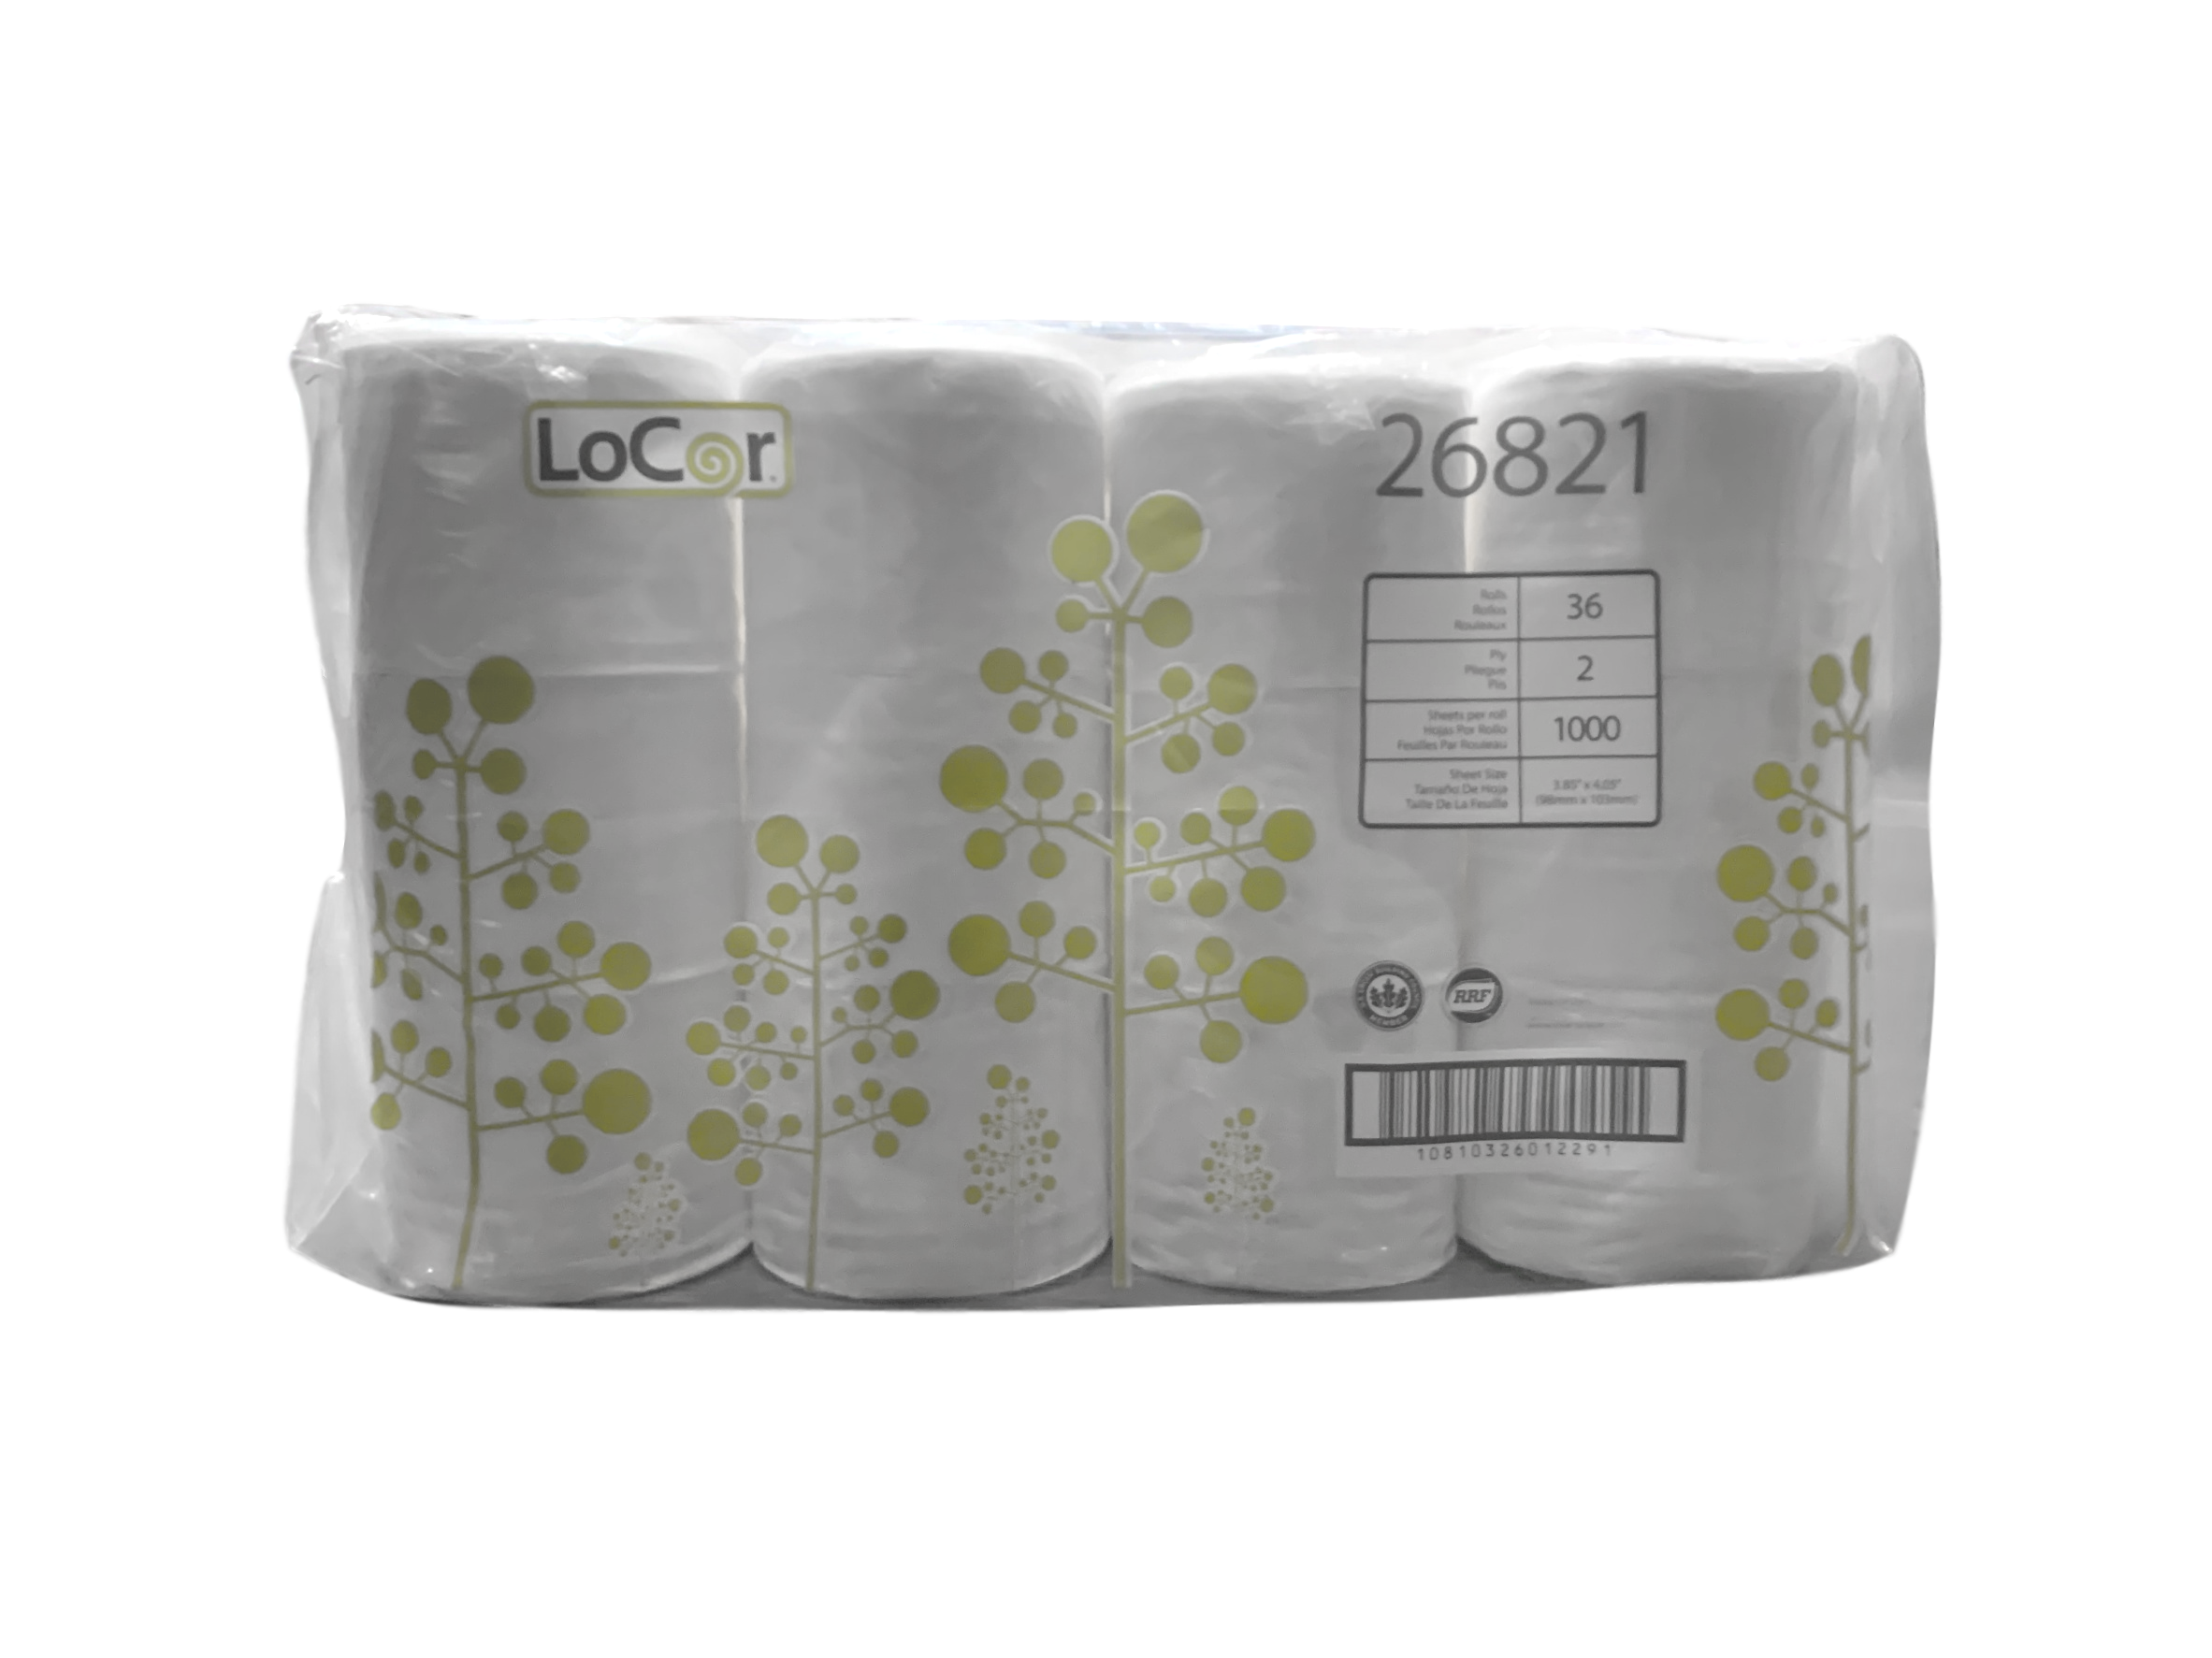 LoCor Toilet Tissue 2ply
36/1000